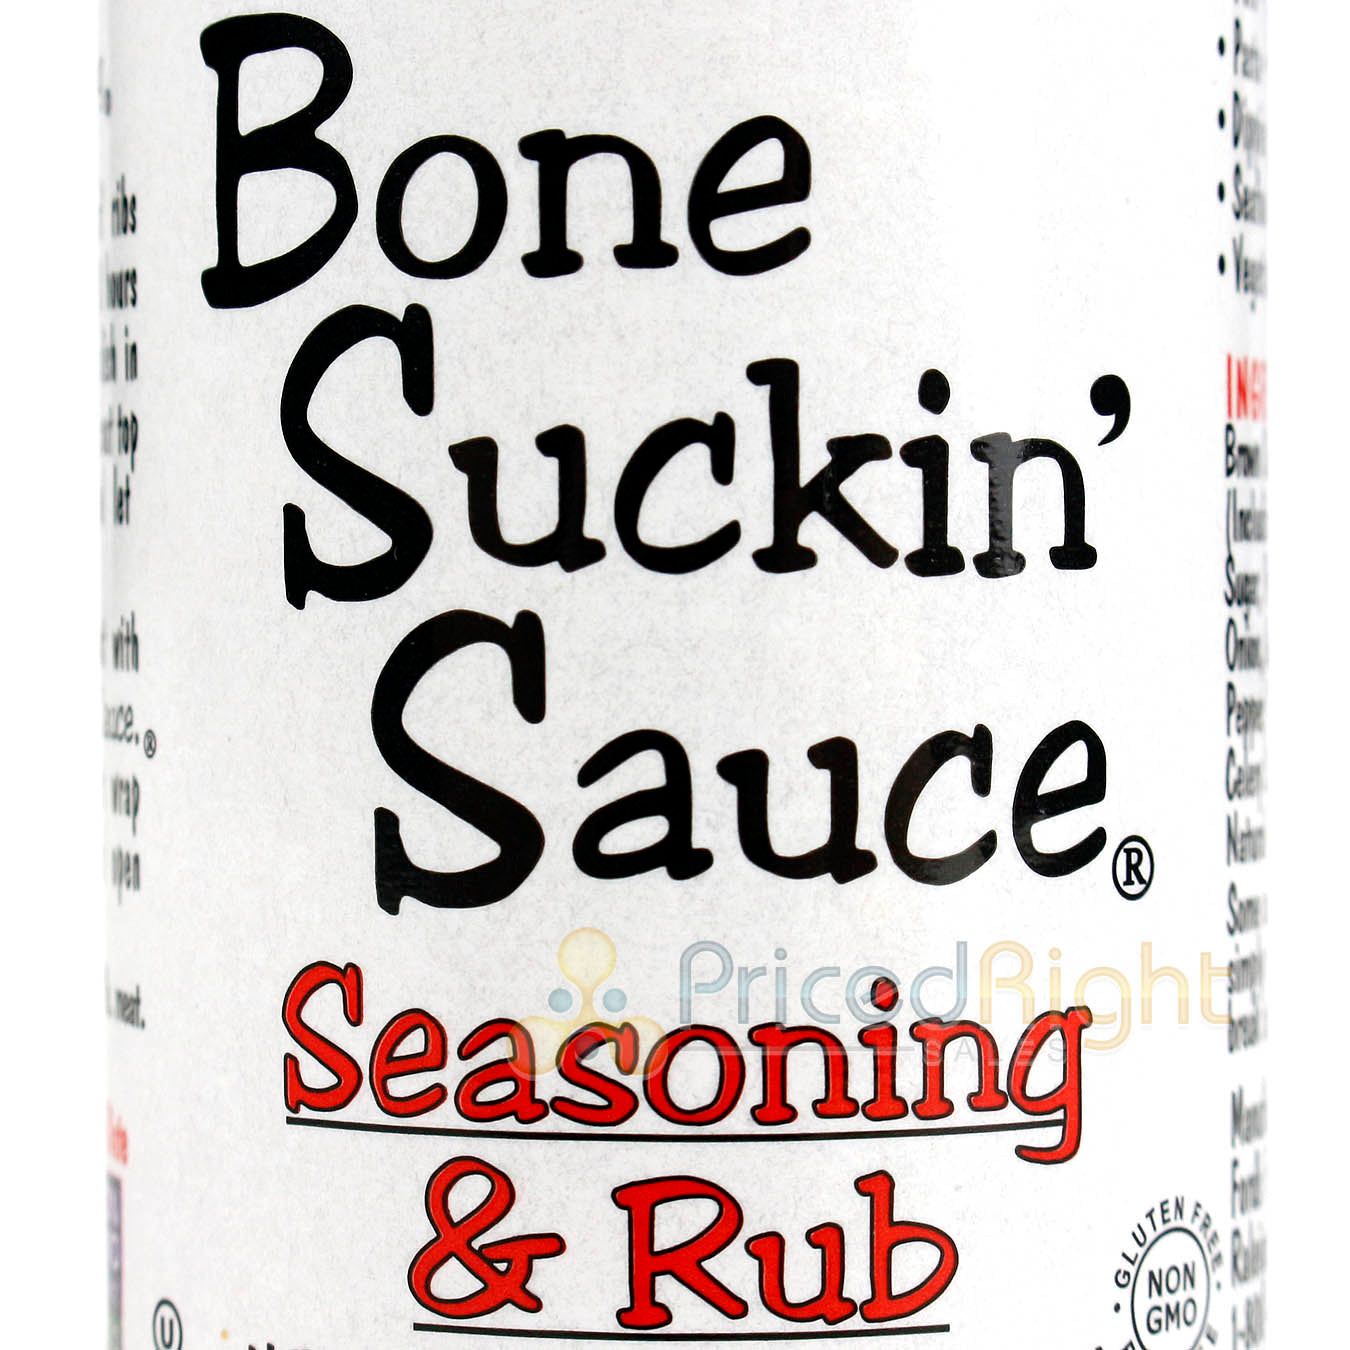 Bone Suckin' Sauce Seasoning and Rub 5.8 Oz Bottle Non Gmo Gluten & Fat Free